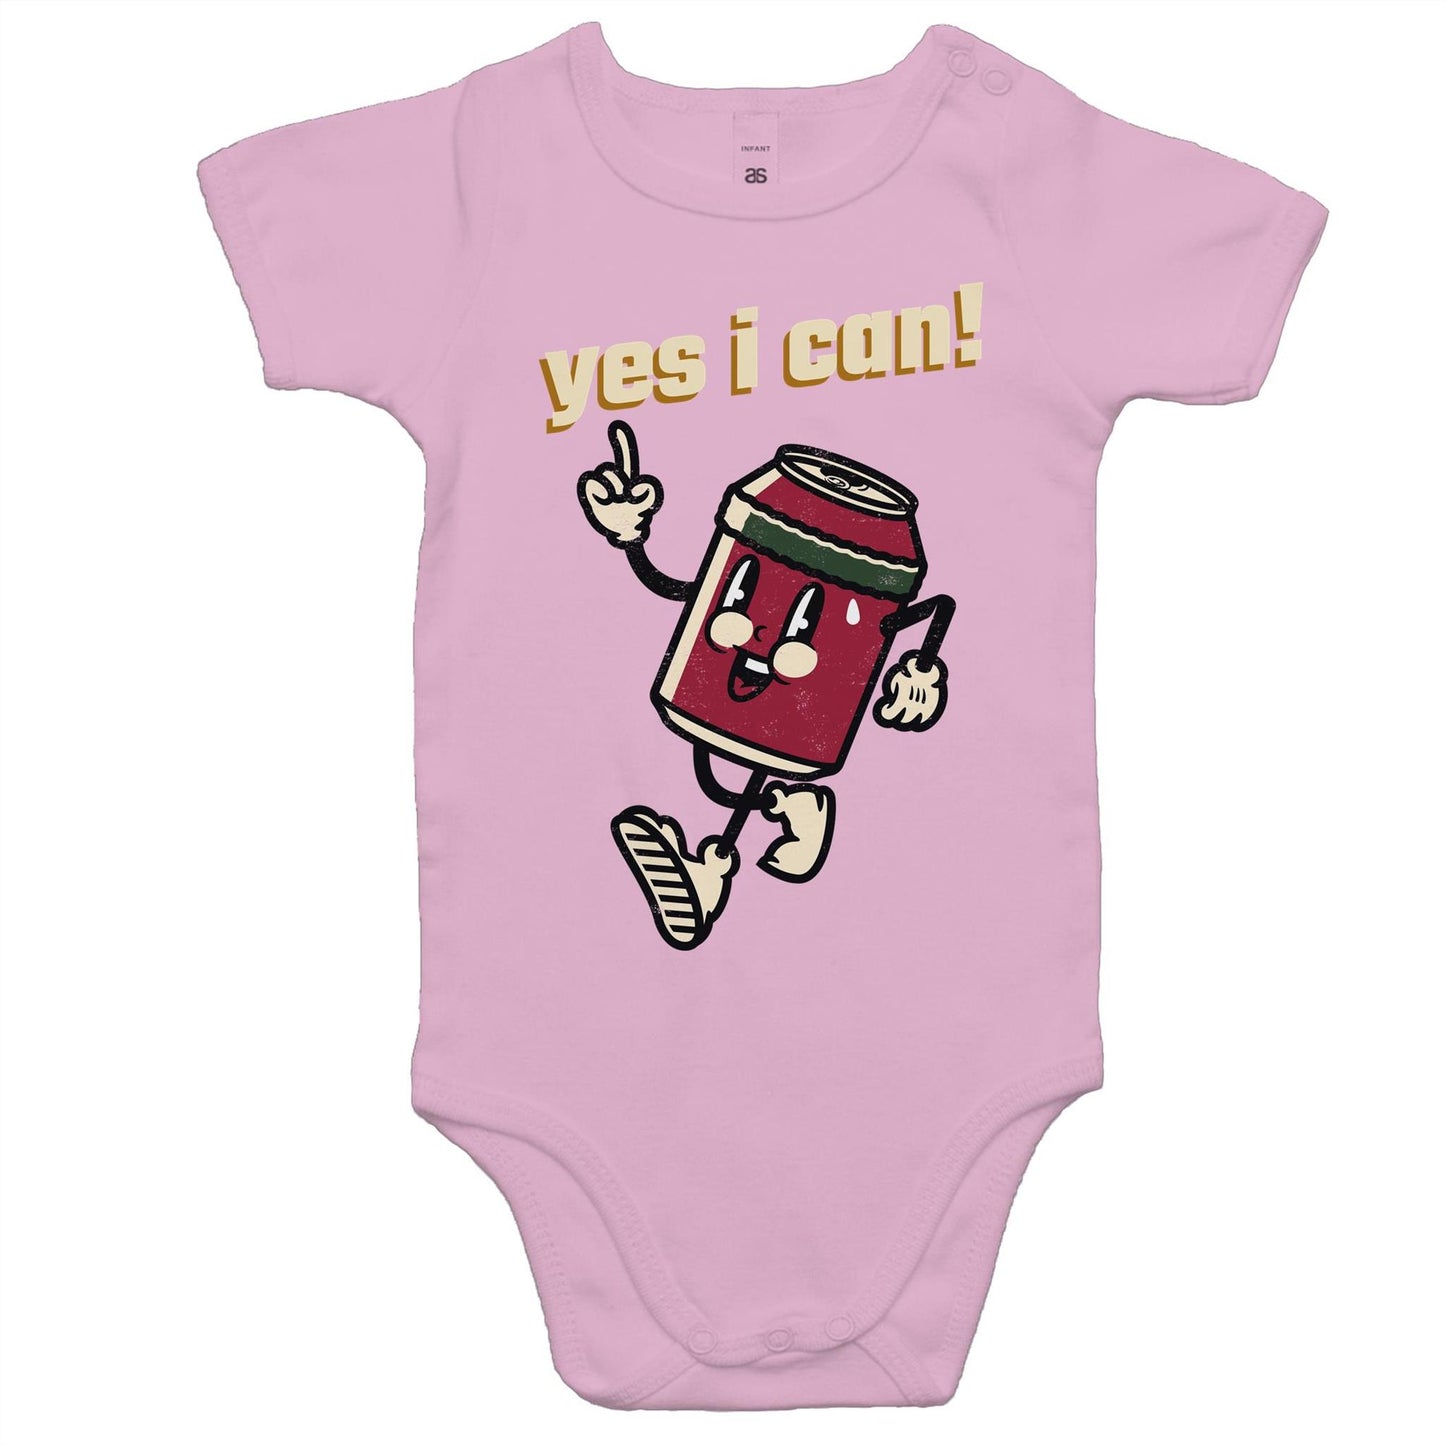 Yes I Can! - Baby Bodysuit Pink Baby Bodysuit Motivation Retro